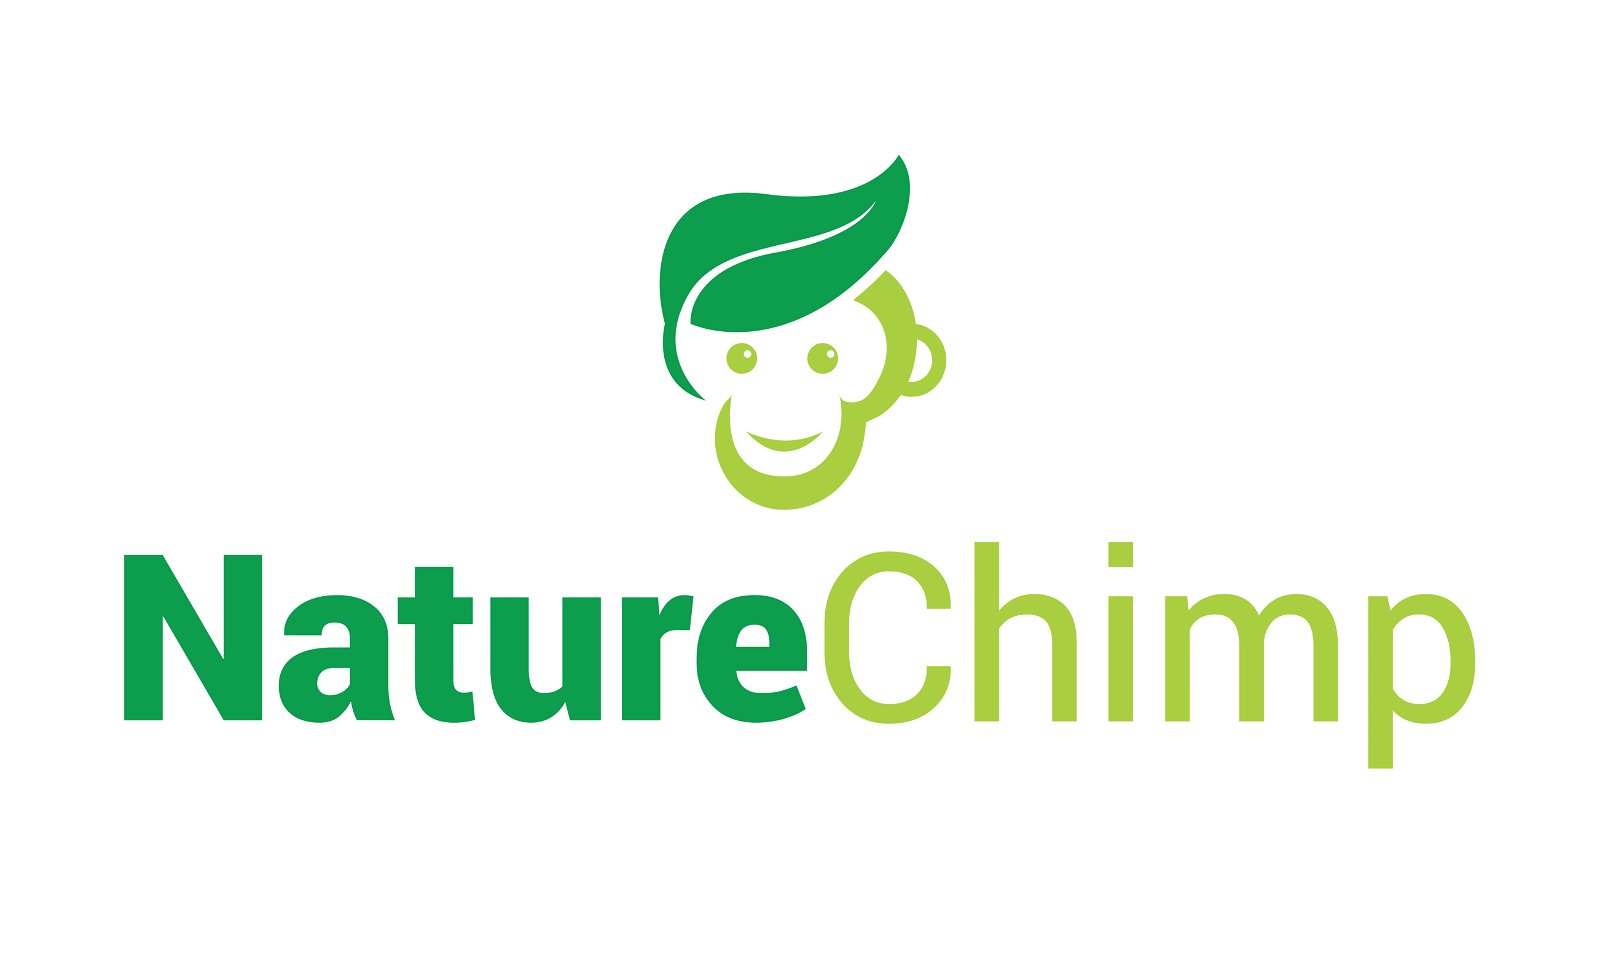 NatureChimp.com - Creative brandable domain for sale